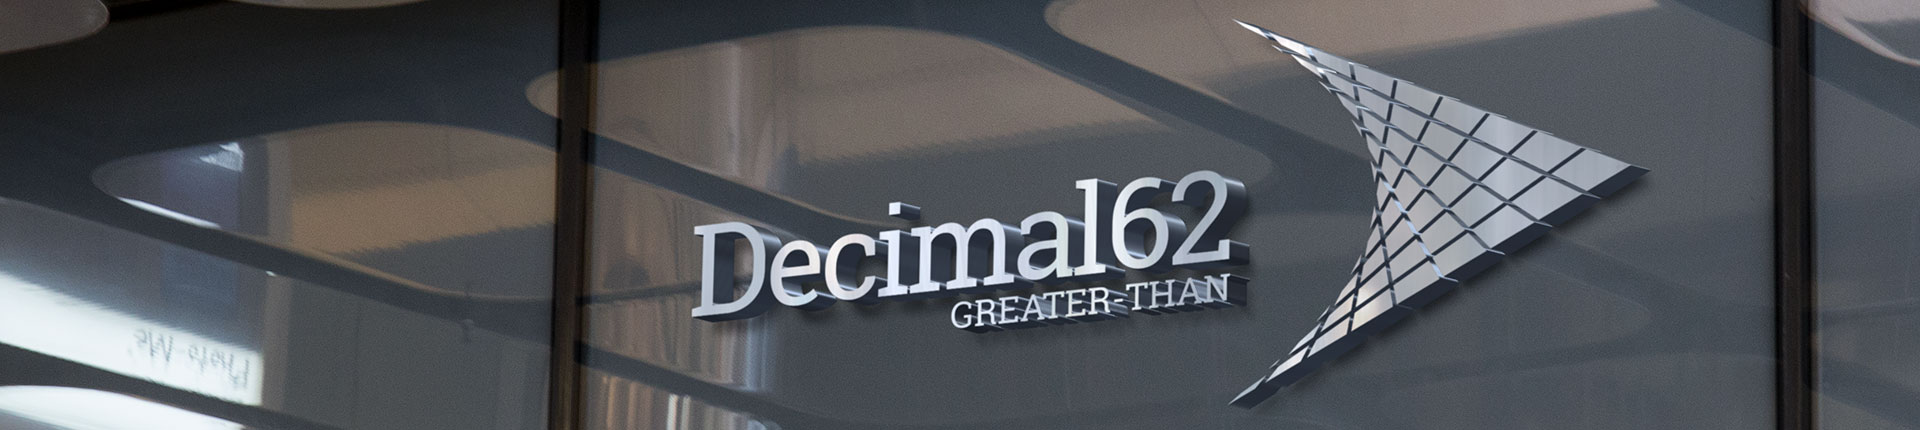 Decimal 62 Office